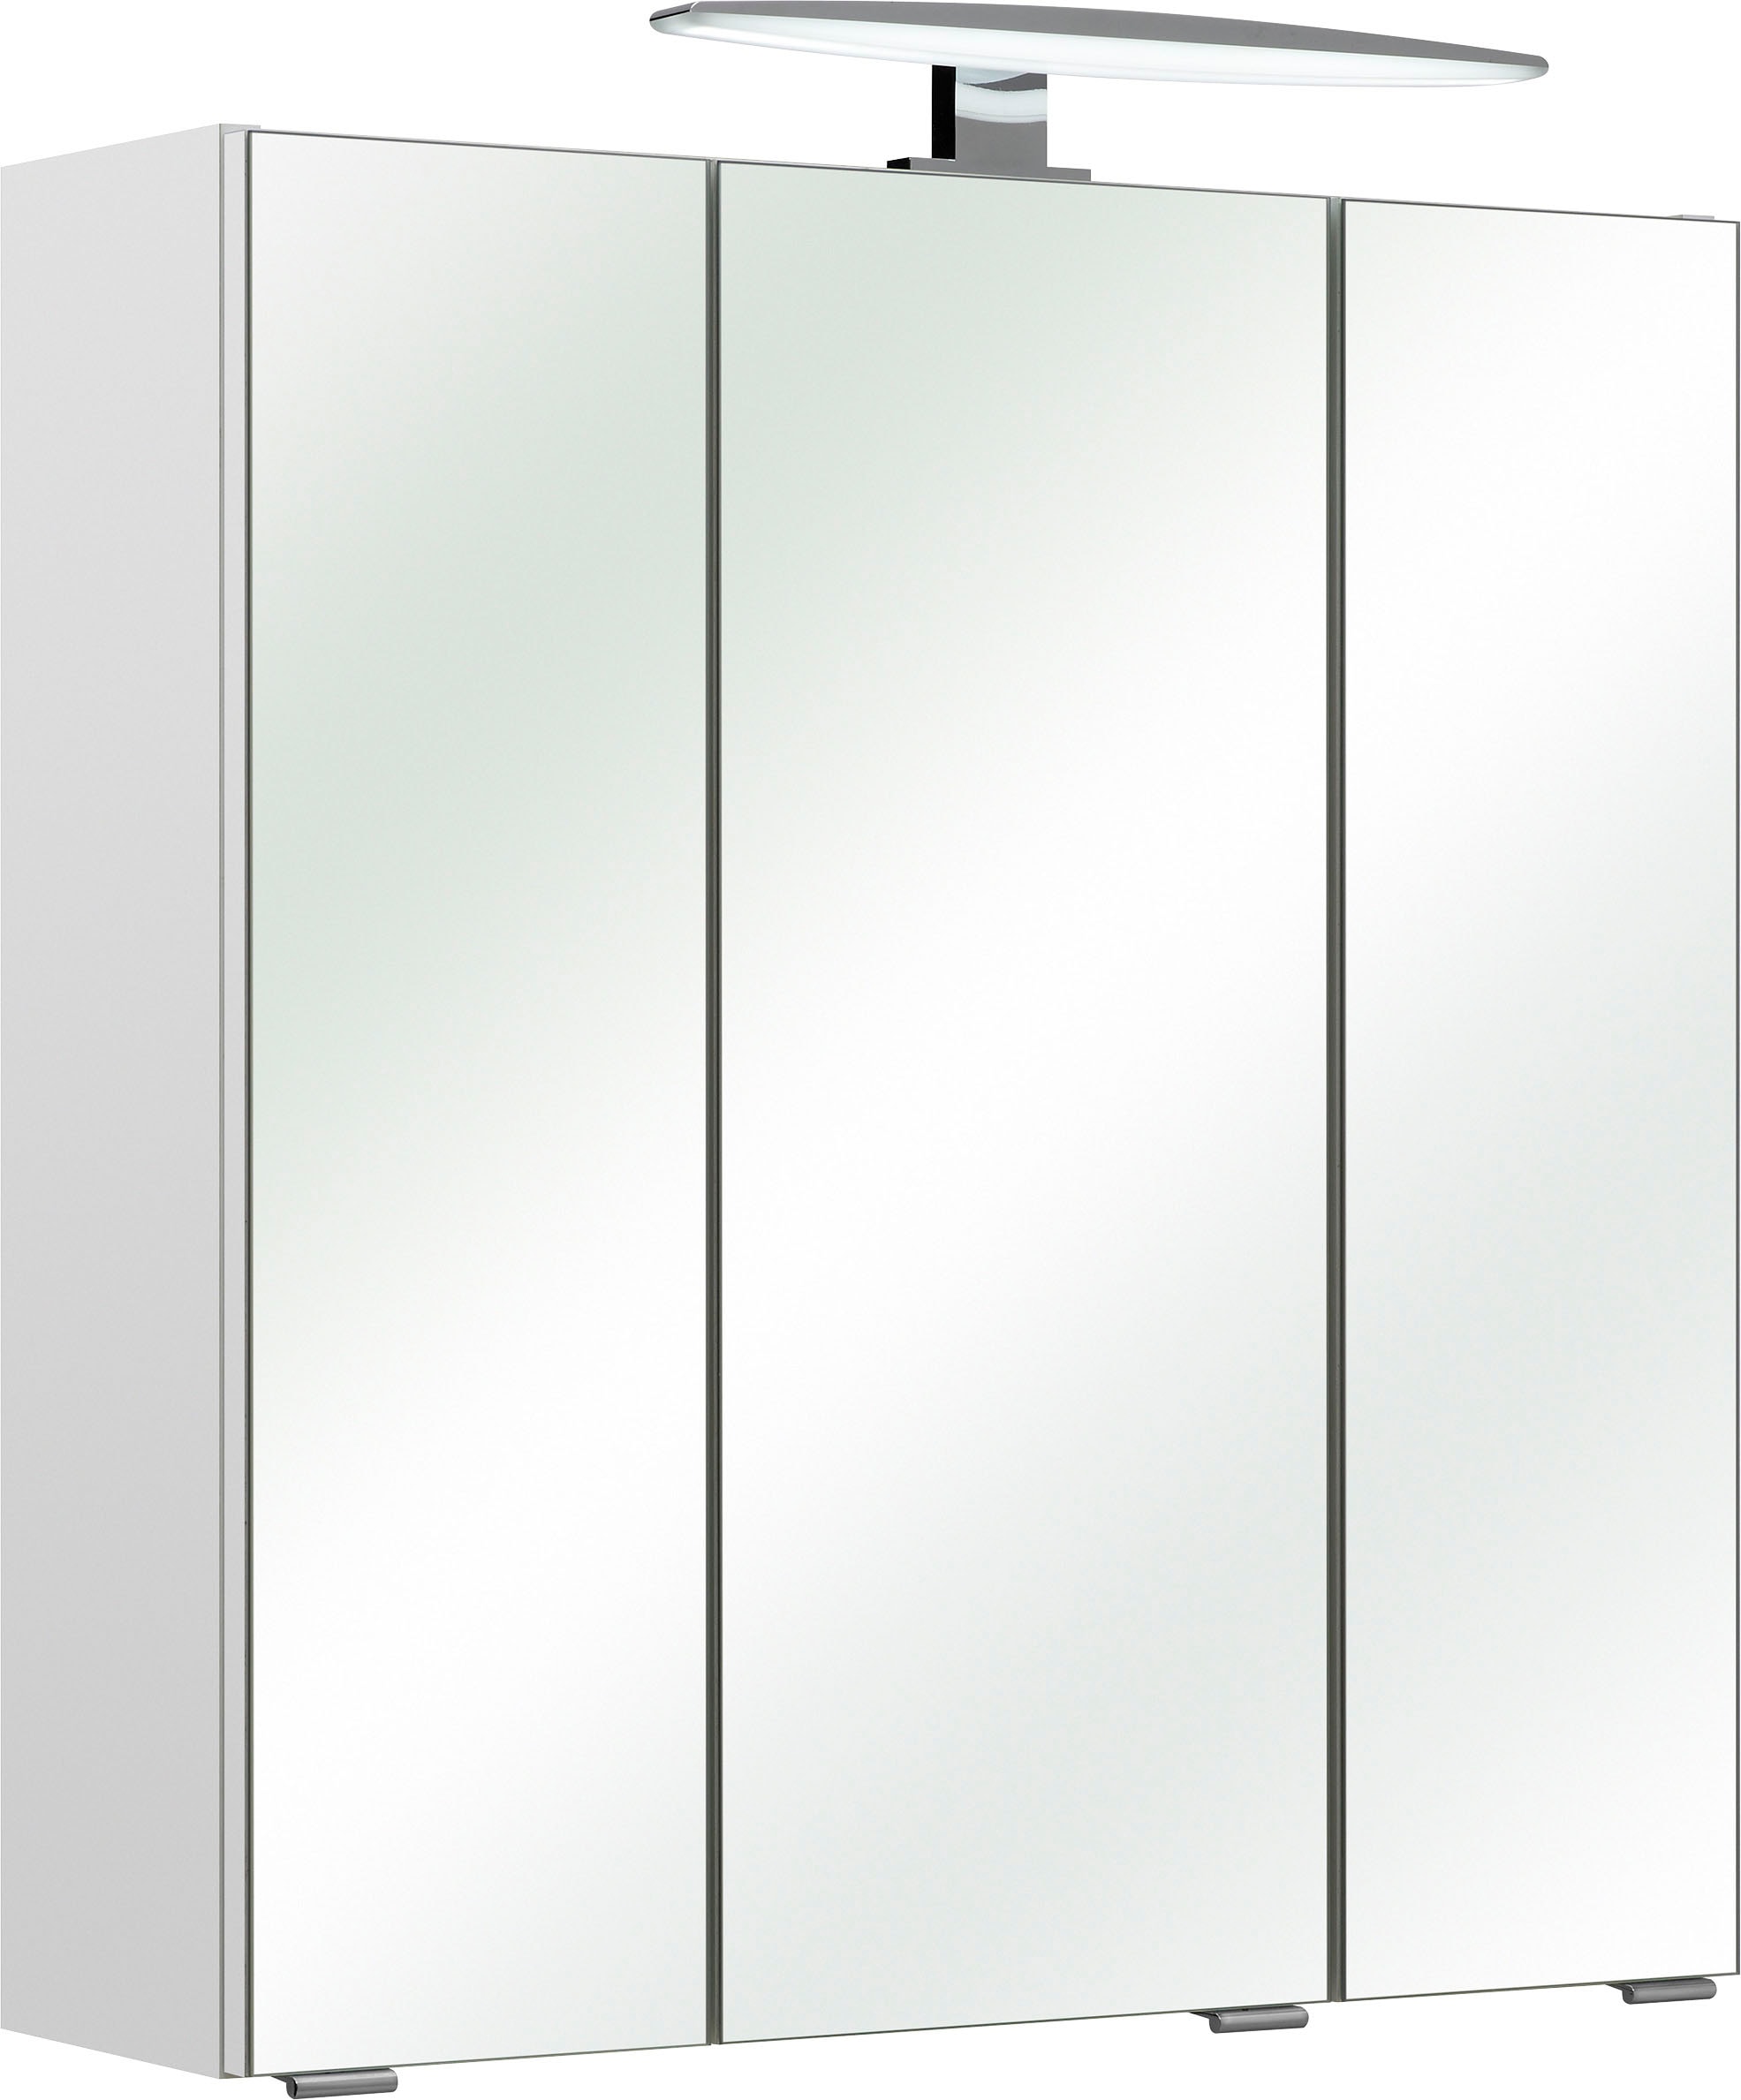 PELIPAL Spiegelschrank »Quickset 953«, Breite 65 cm, 3-türig,  LED-Beleuchtung, Schalter-/Steckdosenbox bei OTTO